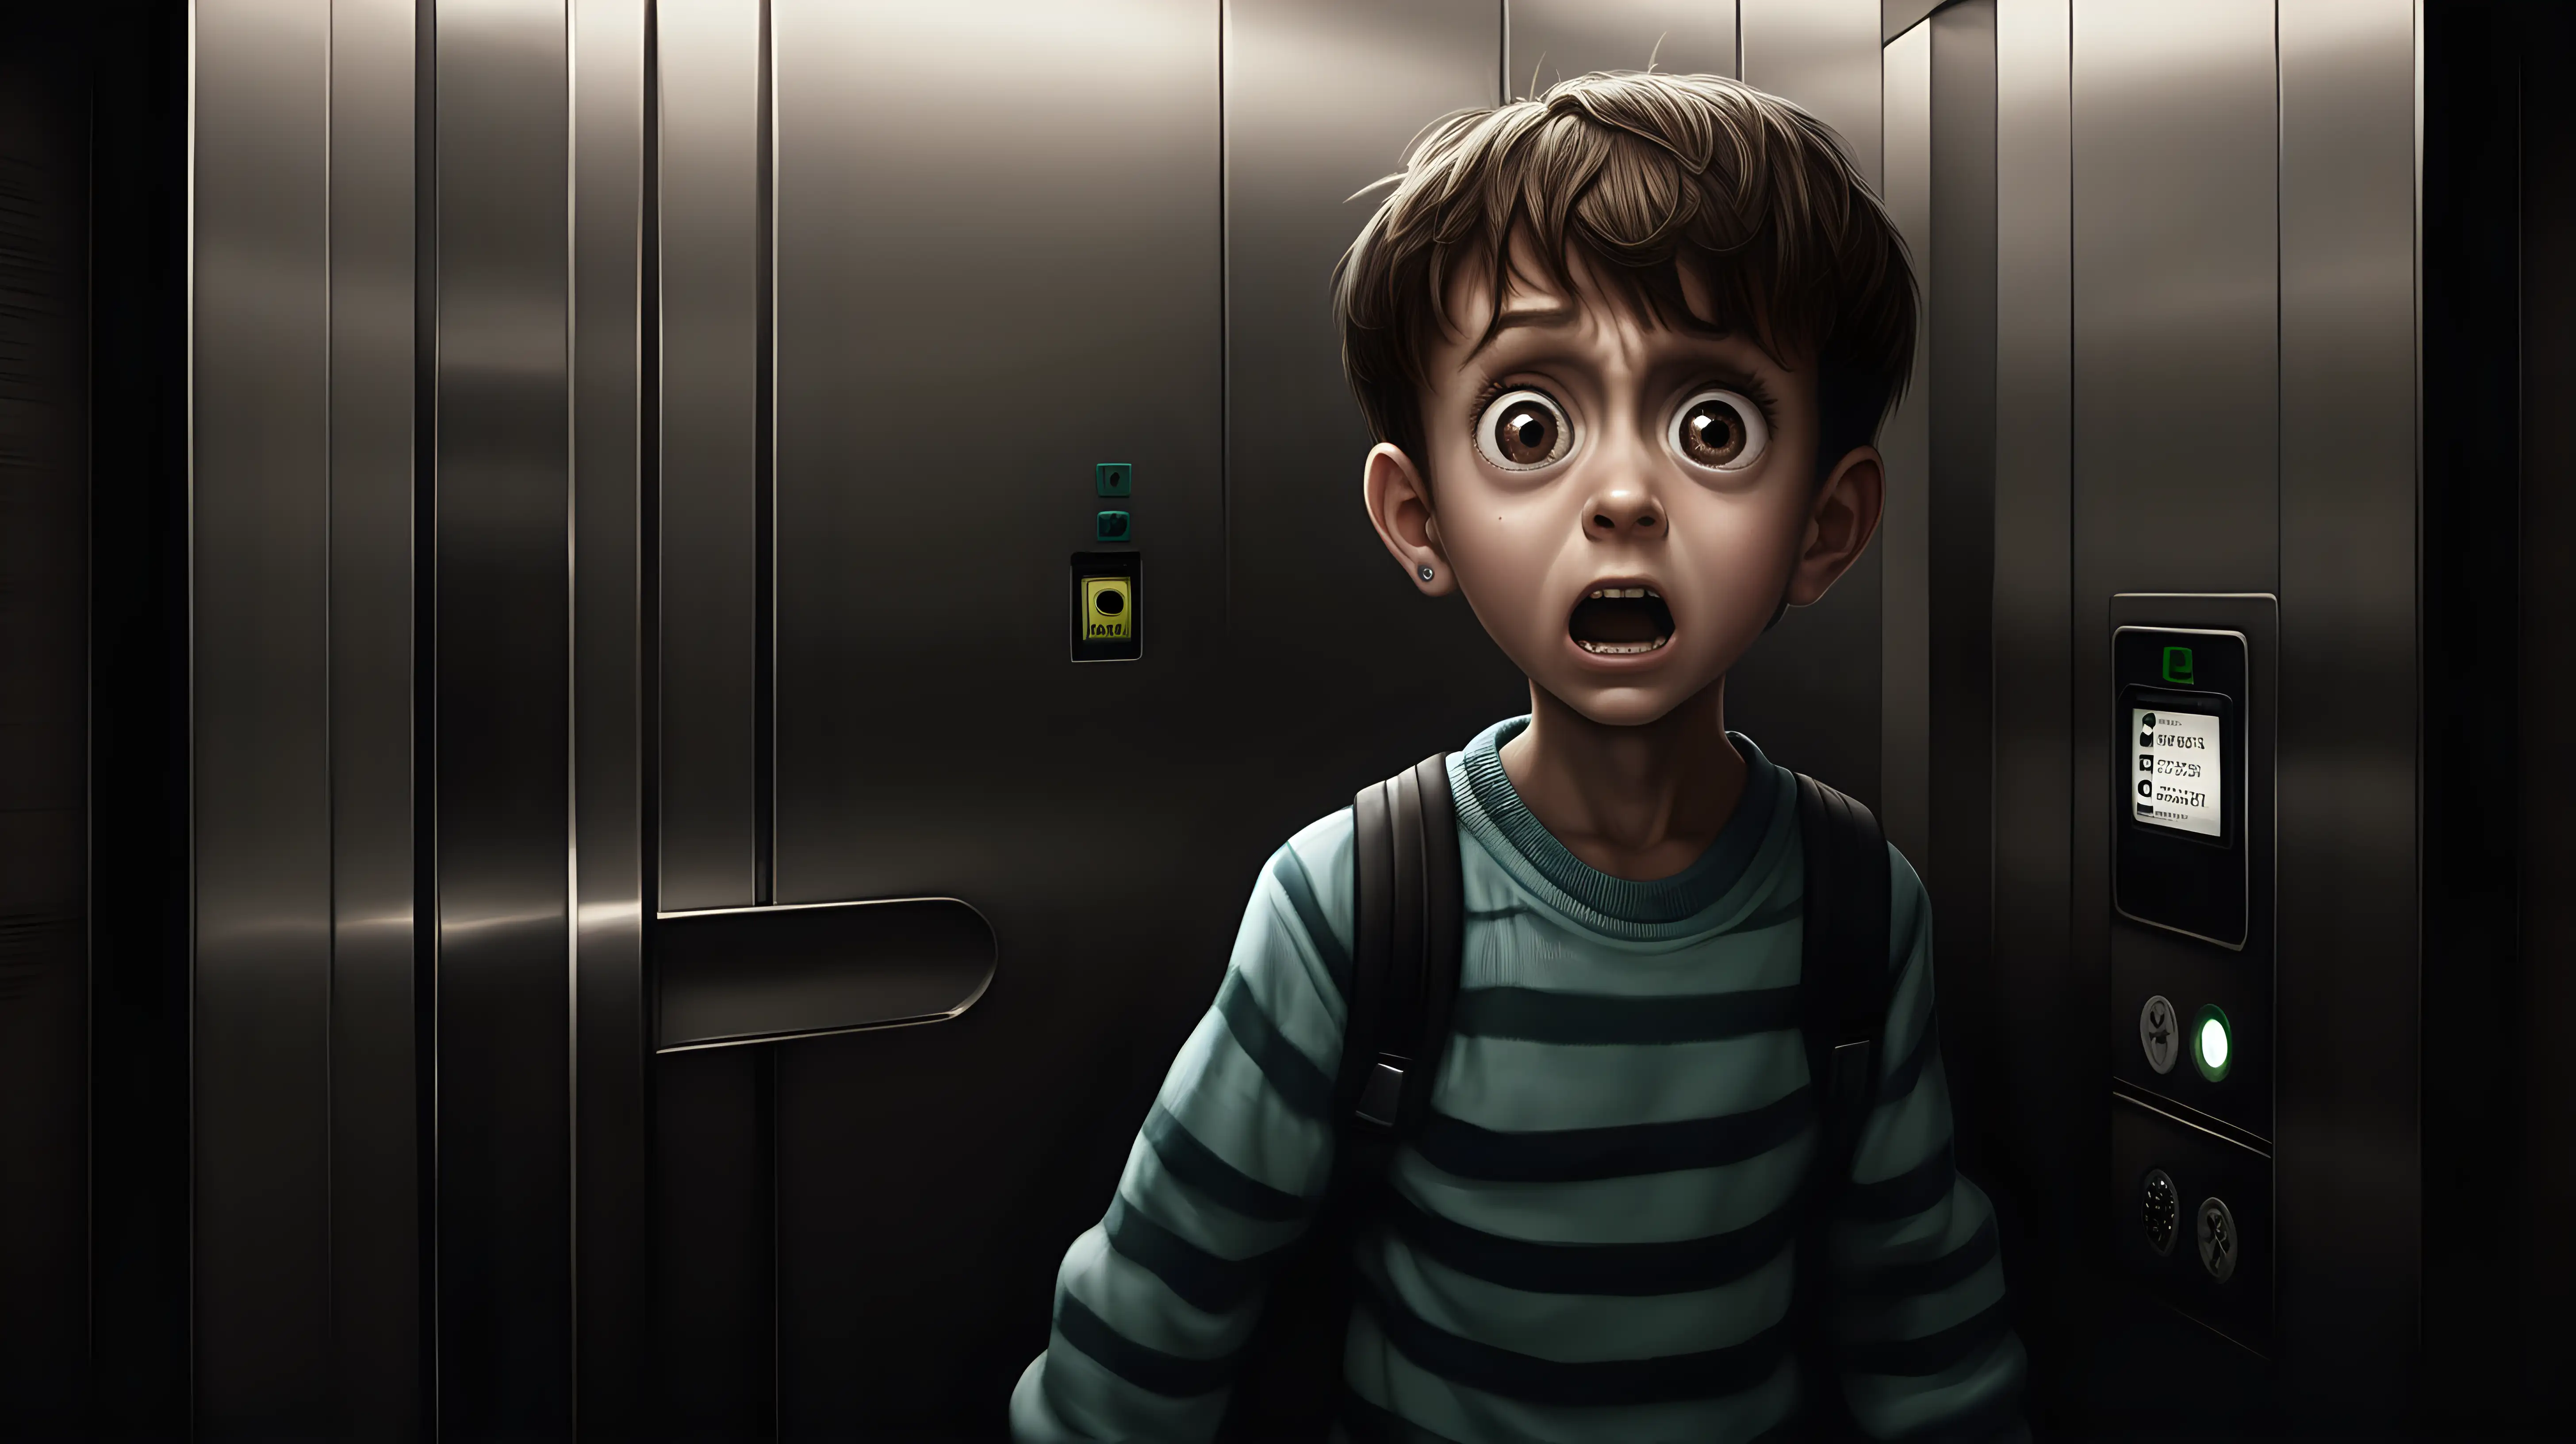 Anxious Child in Dimly Lit Elevator